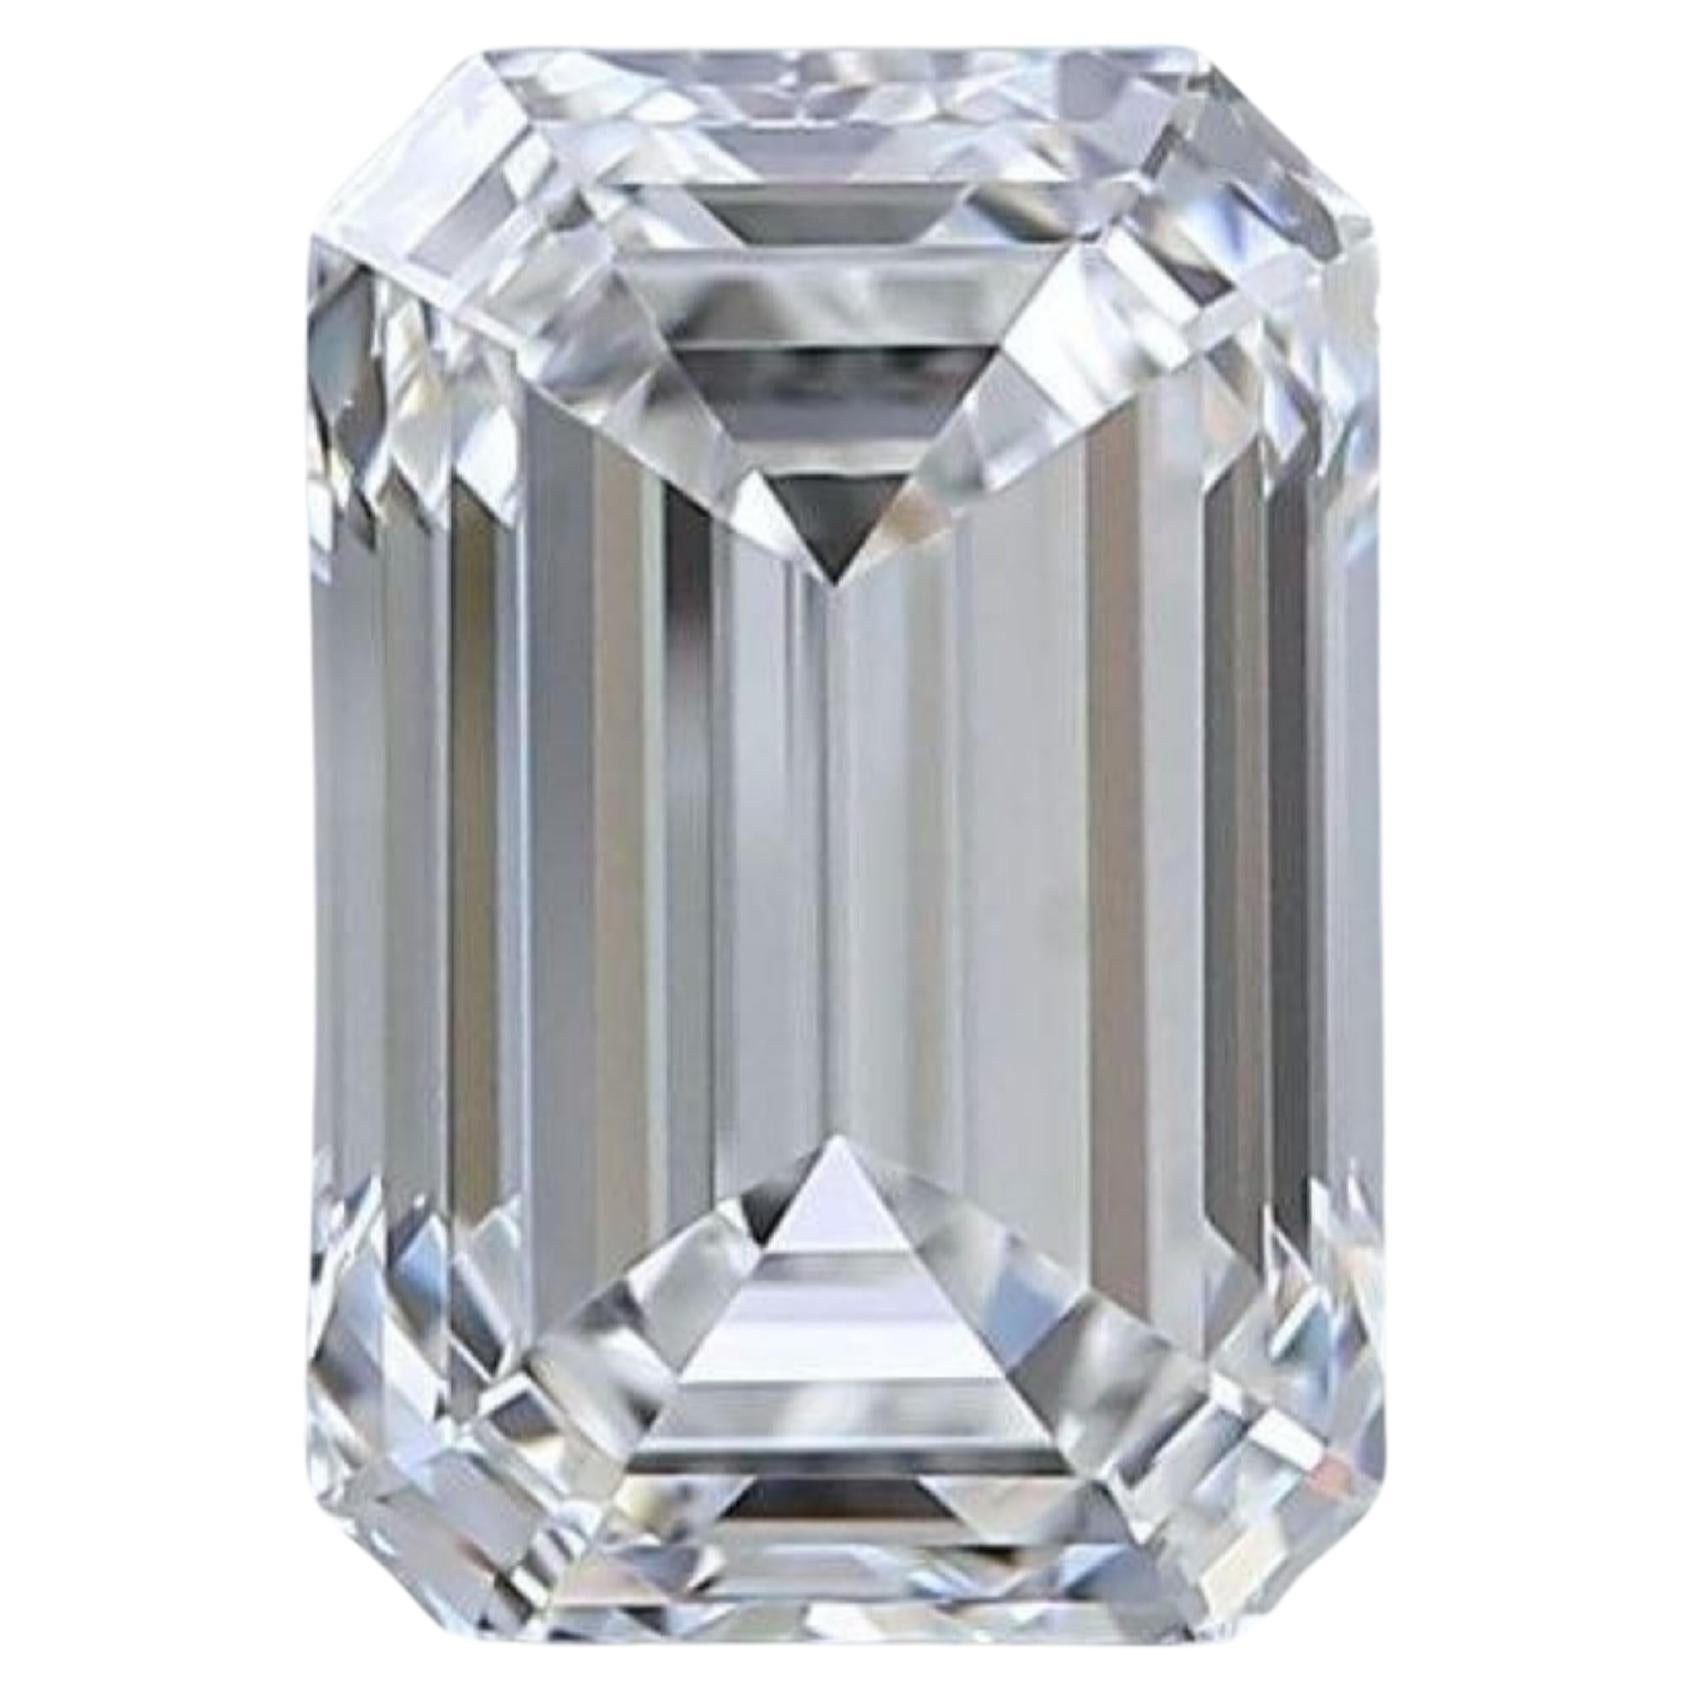 1 pc. Dazzling 1.5 Emerald Cut Natural Diamond For Sale